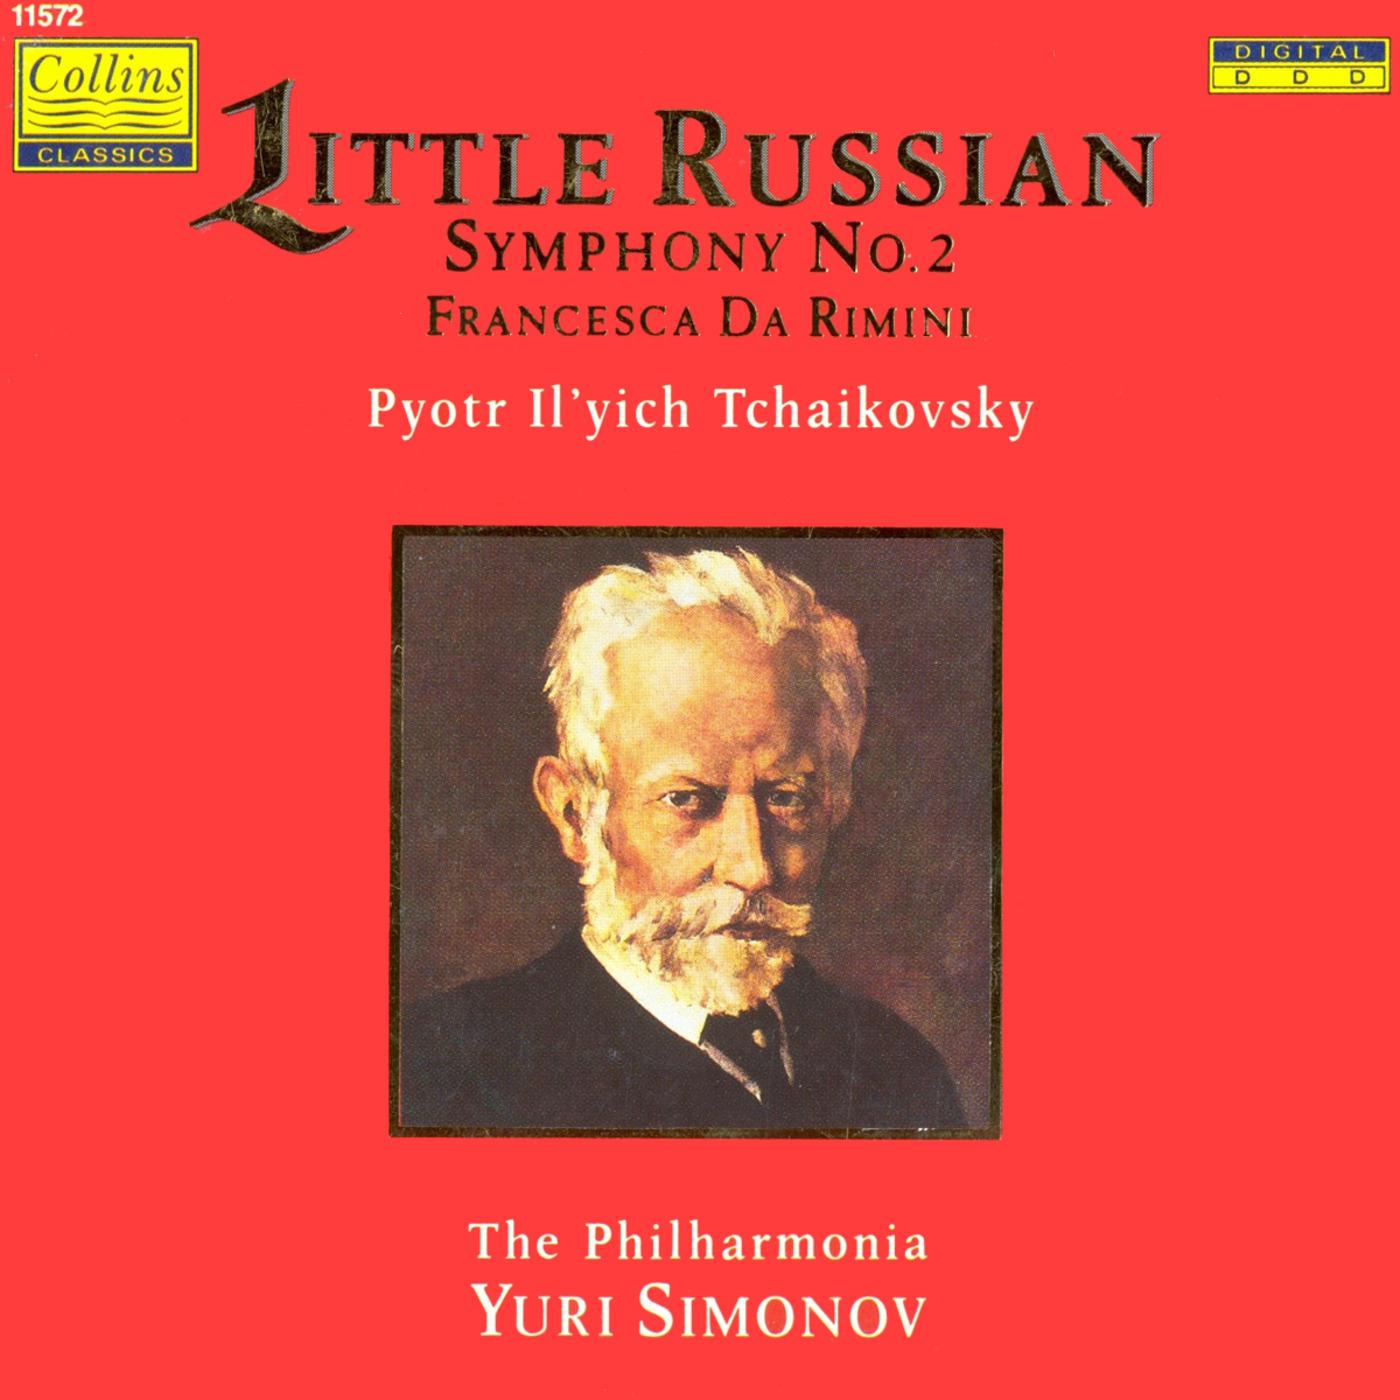 Symphony No. 2 in C Minor, Op. 17, "Little Russian": III. Scherzo and Trio: Allegro molto vivace